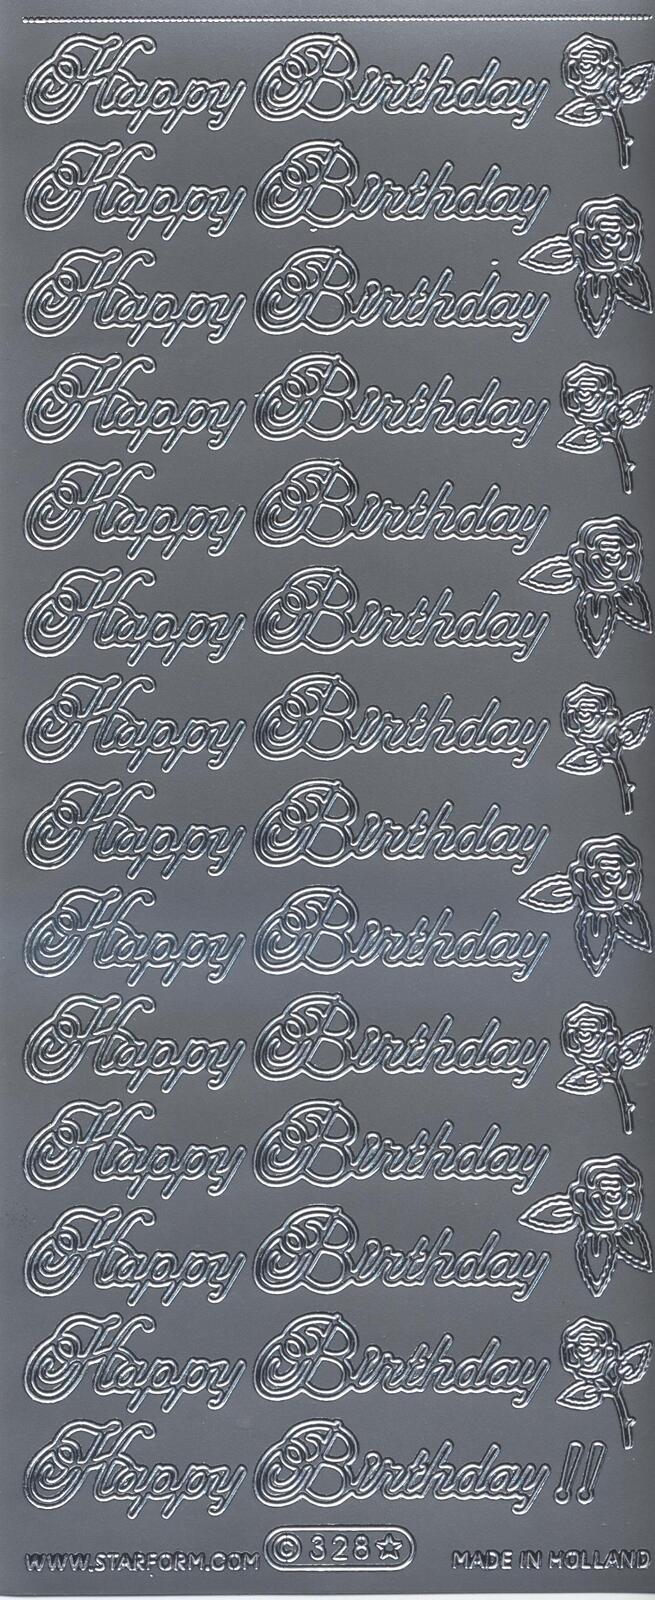 Starform Sticker Sheet 4 x 9 Inch Happy Birthday Silver